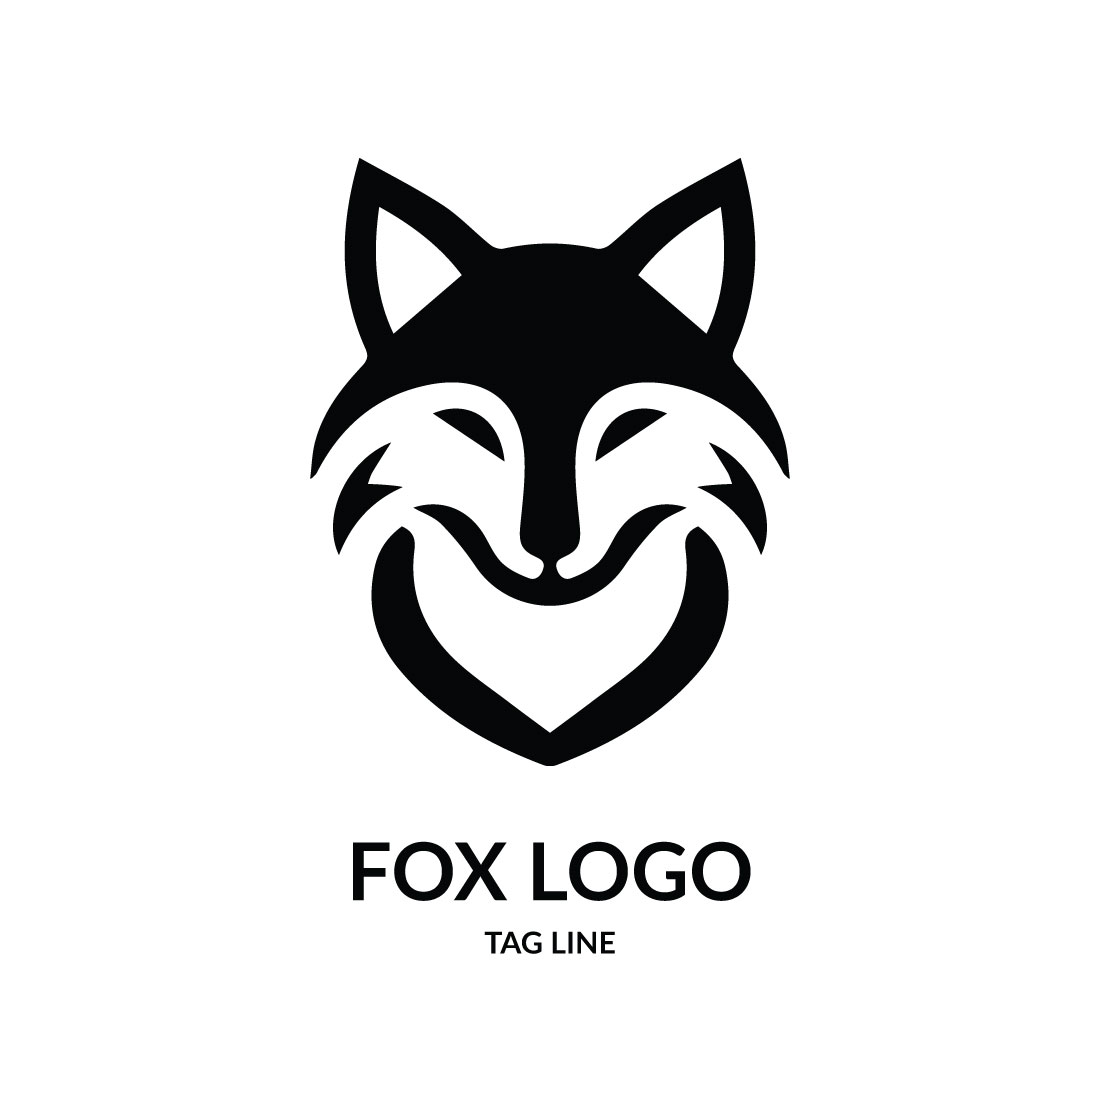 Fox Head Logo Template cover image.